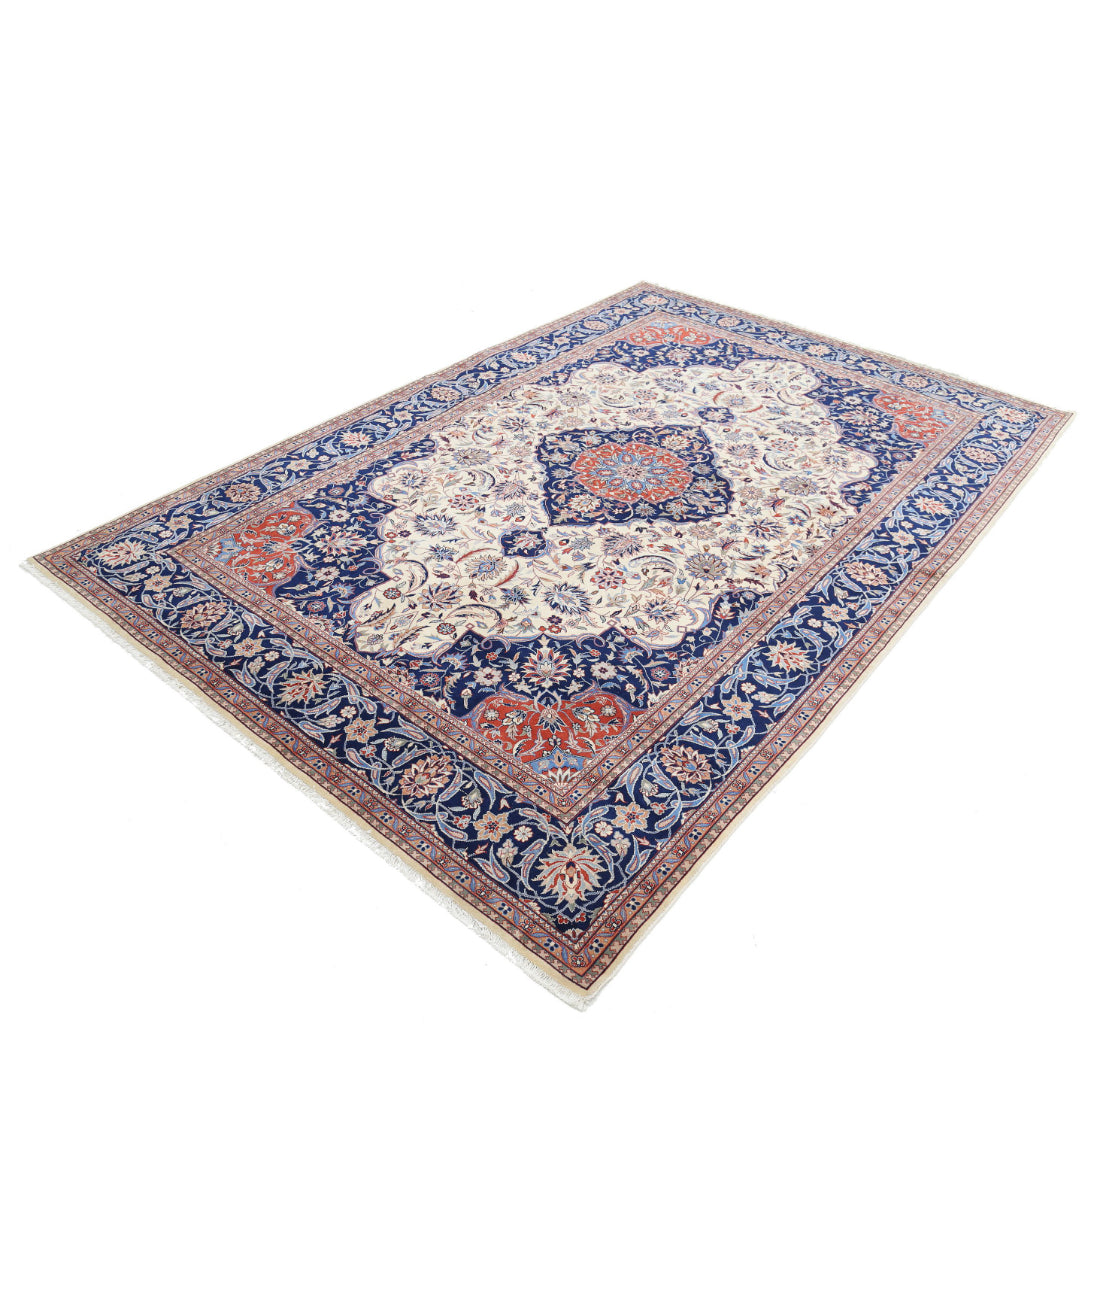 Heritage-hand-knotted-pak-persian-fine-wool-rug-5016577-2.jpg